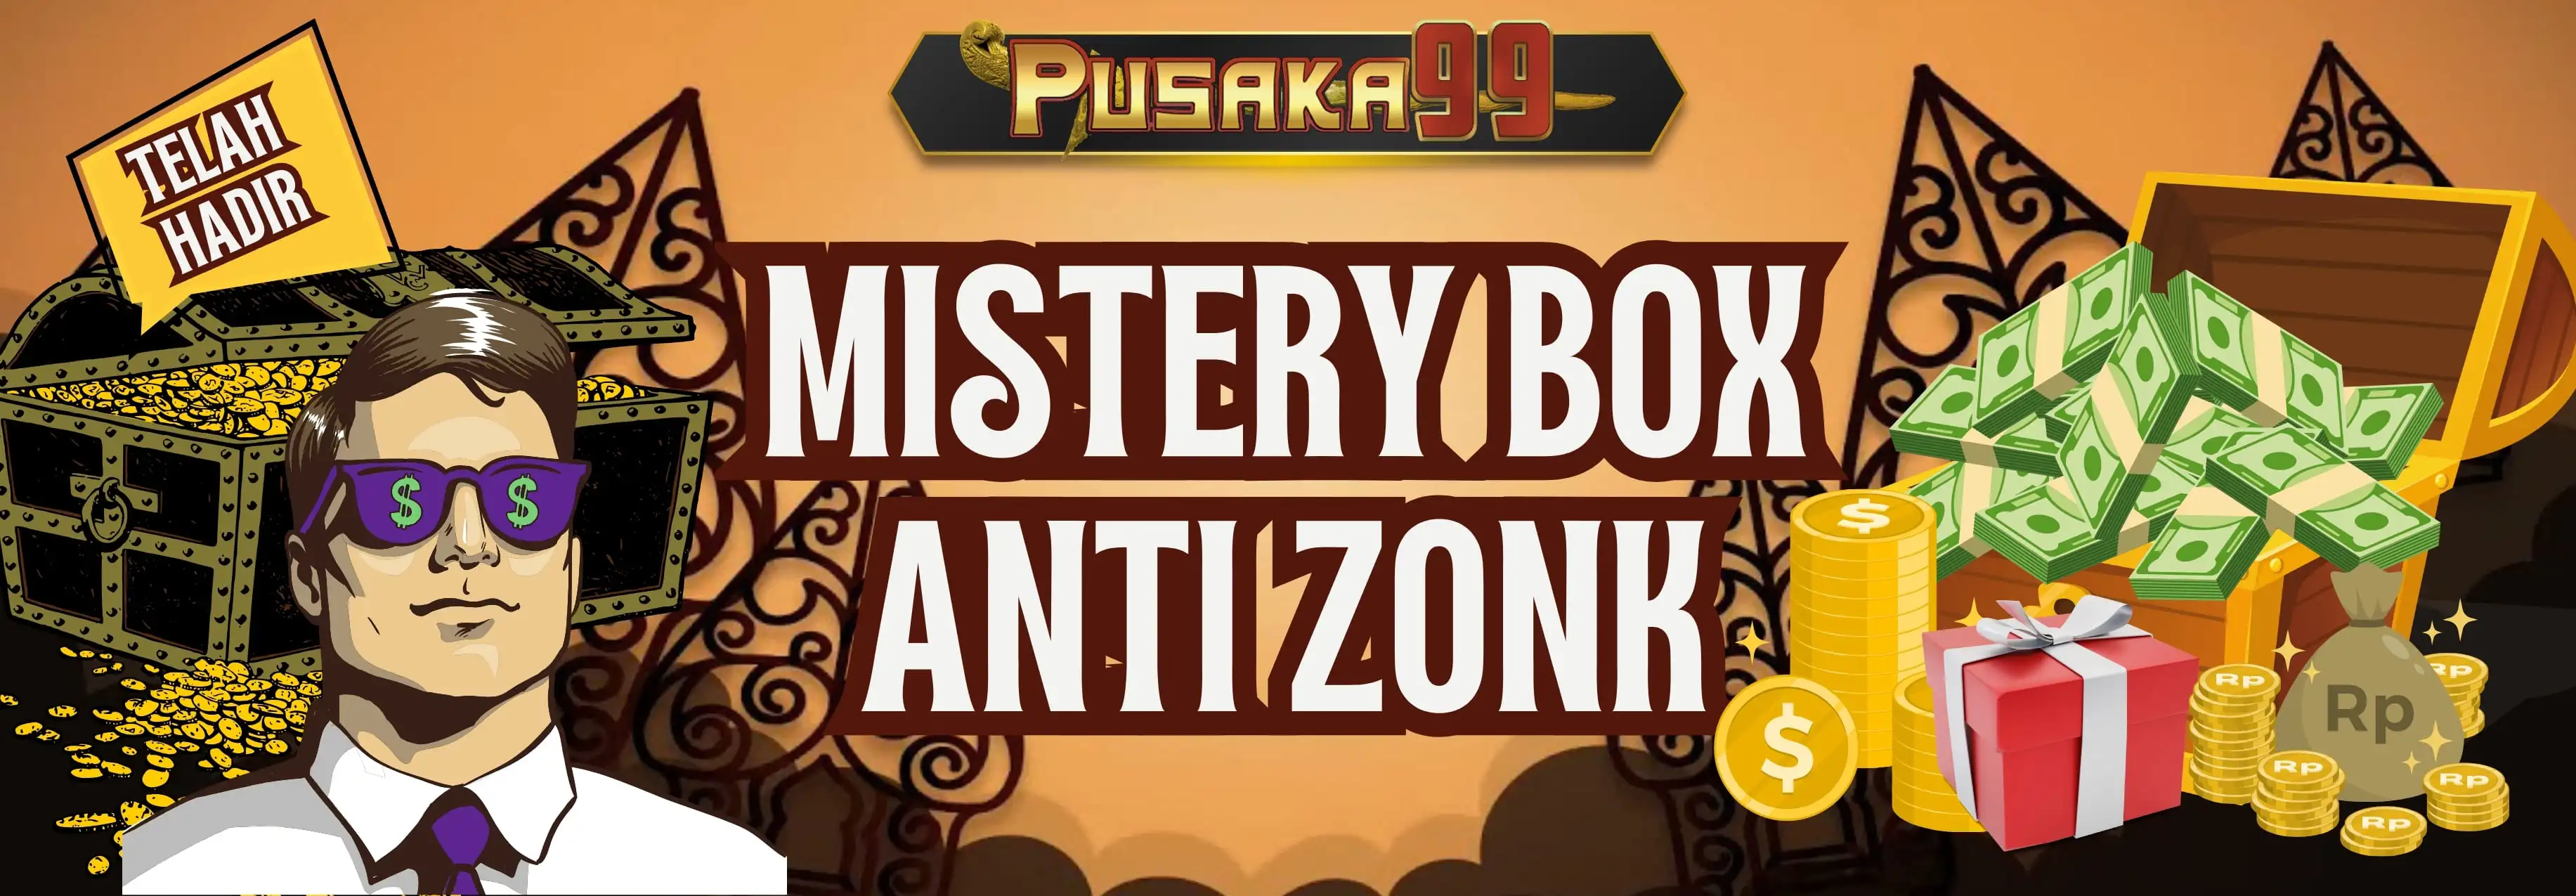 Mystery Box Pusaka99